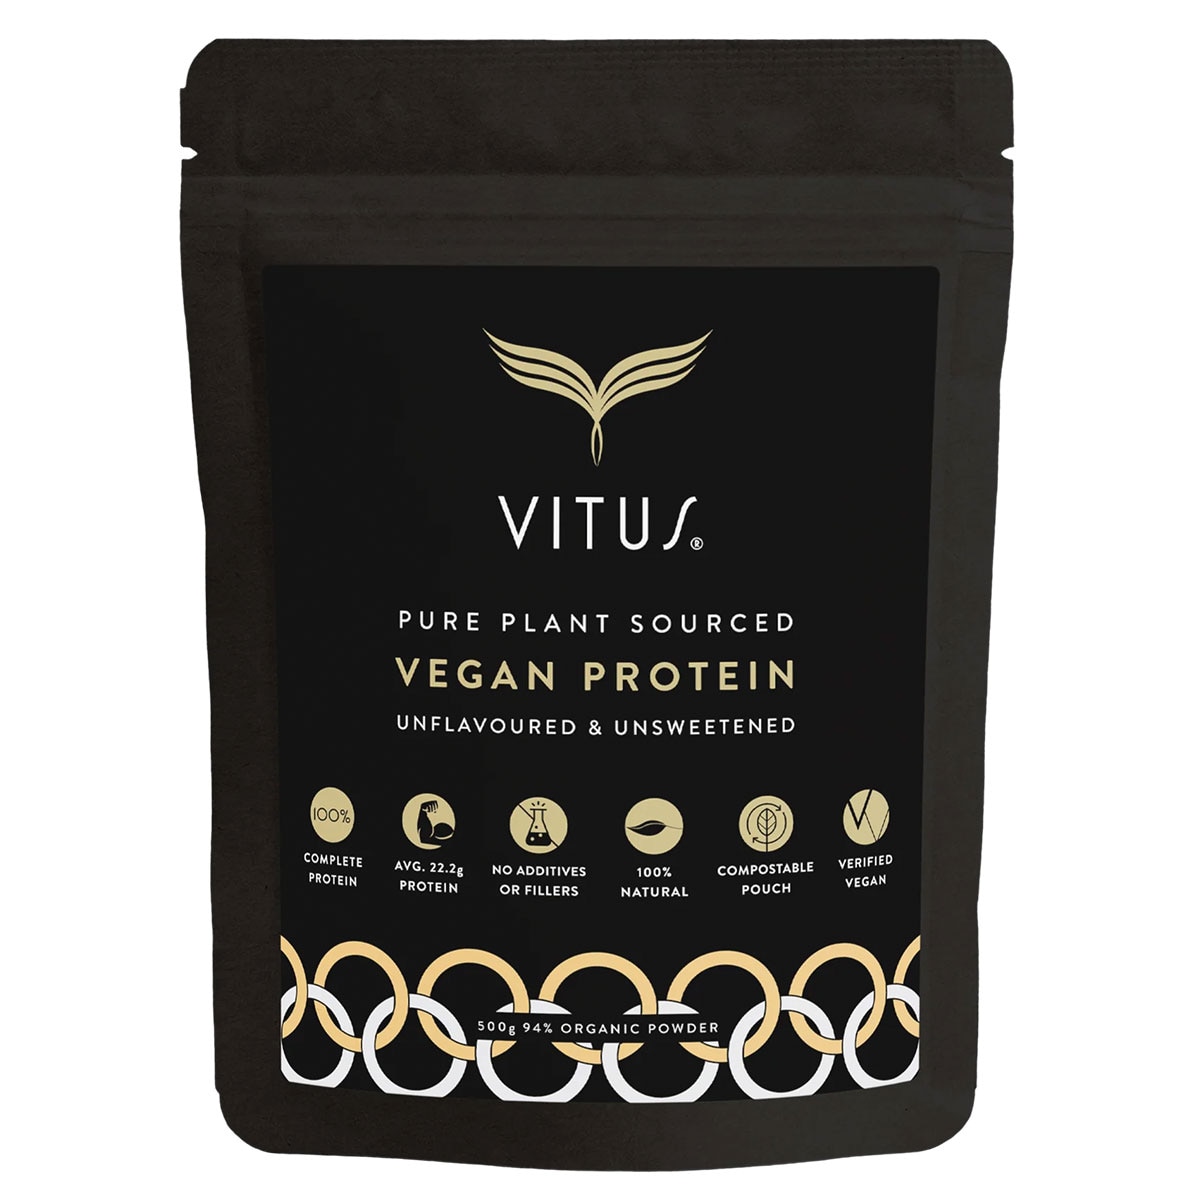 Vitus Vegan Protein Powder 500g Australia